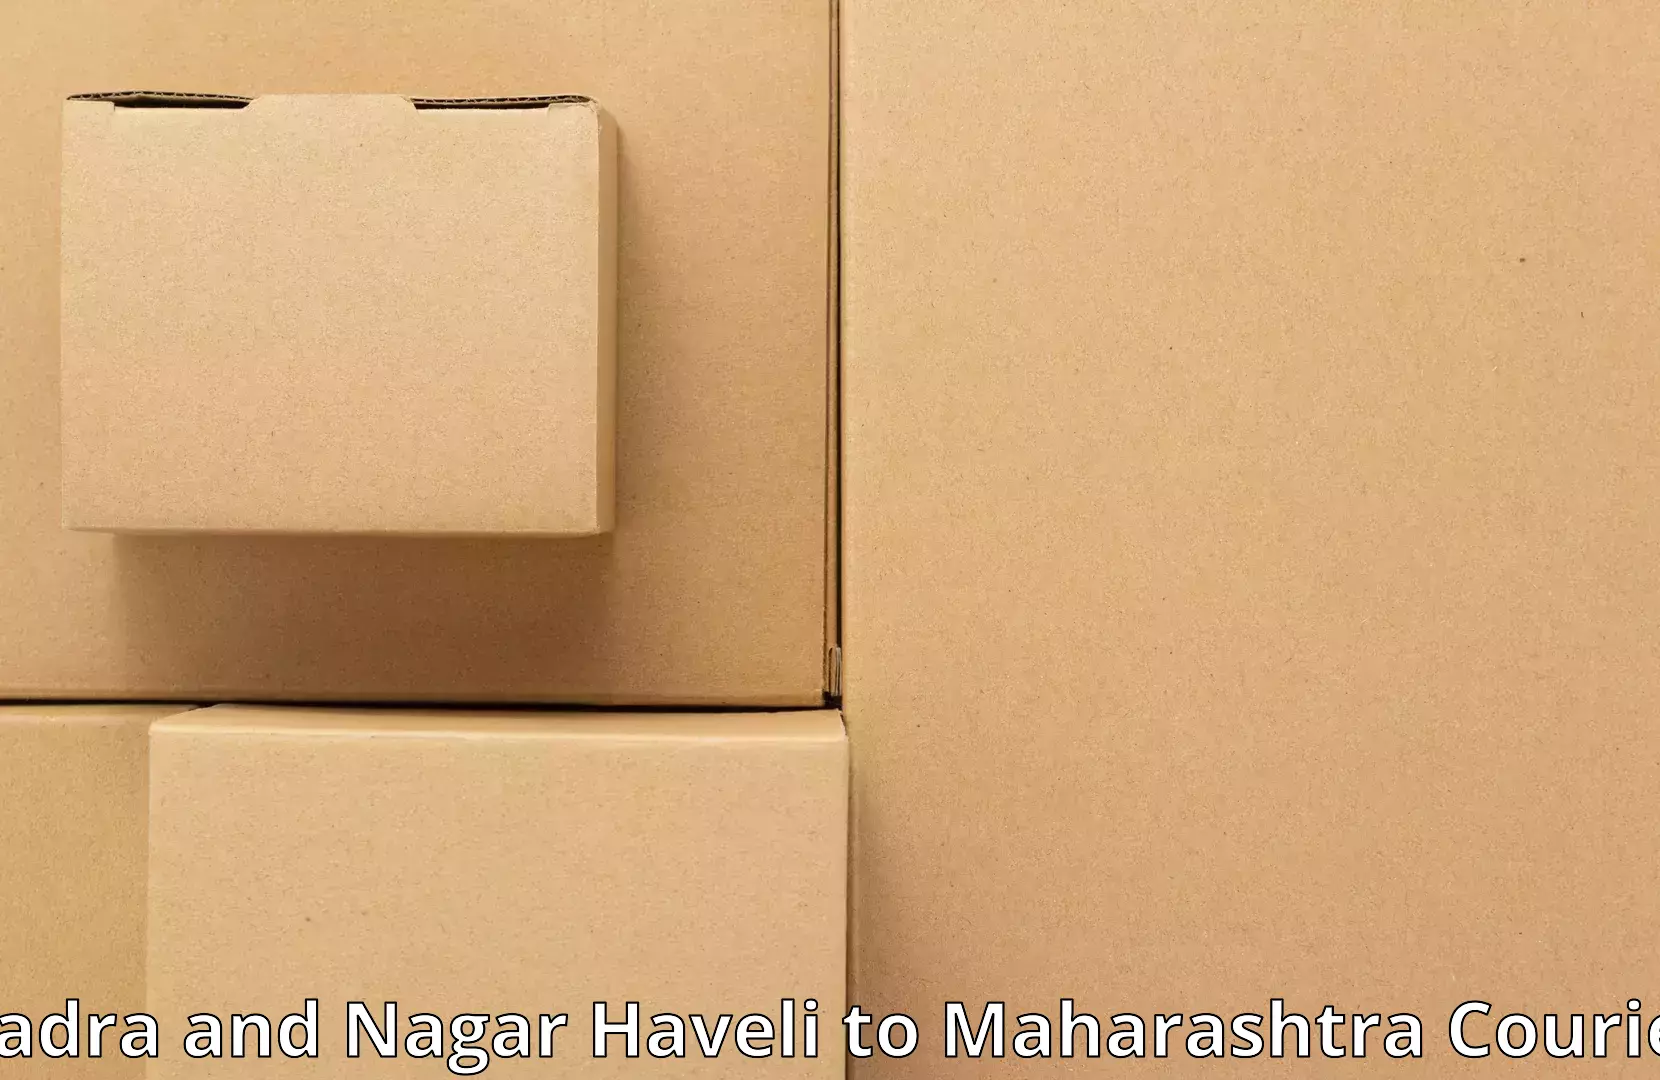 Residential moving experts Dadra and Nagar Haveli to Morshi